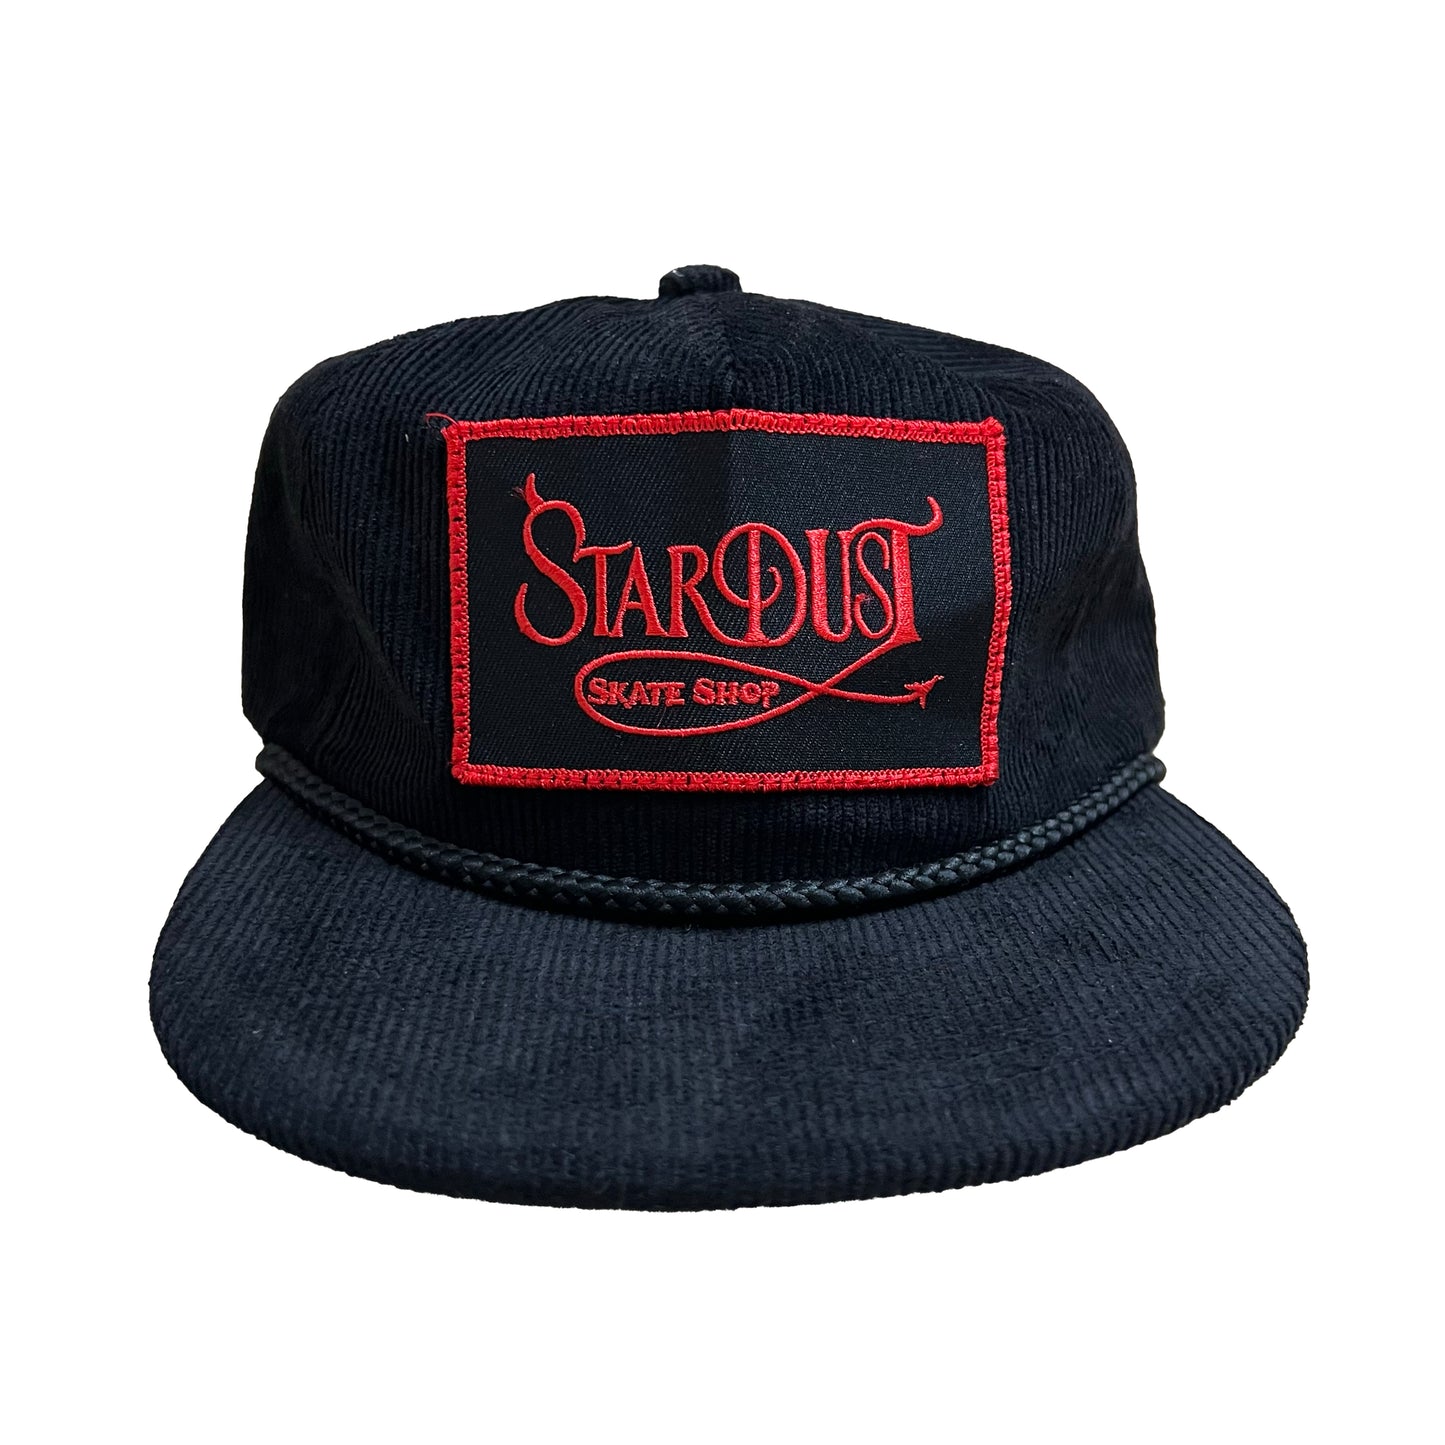 Stardust Devil's Wanderlust Patch Corduroy Snapback Hat 002 White / Red / Black